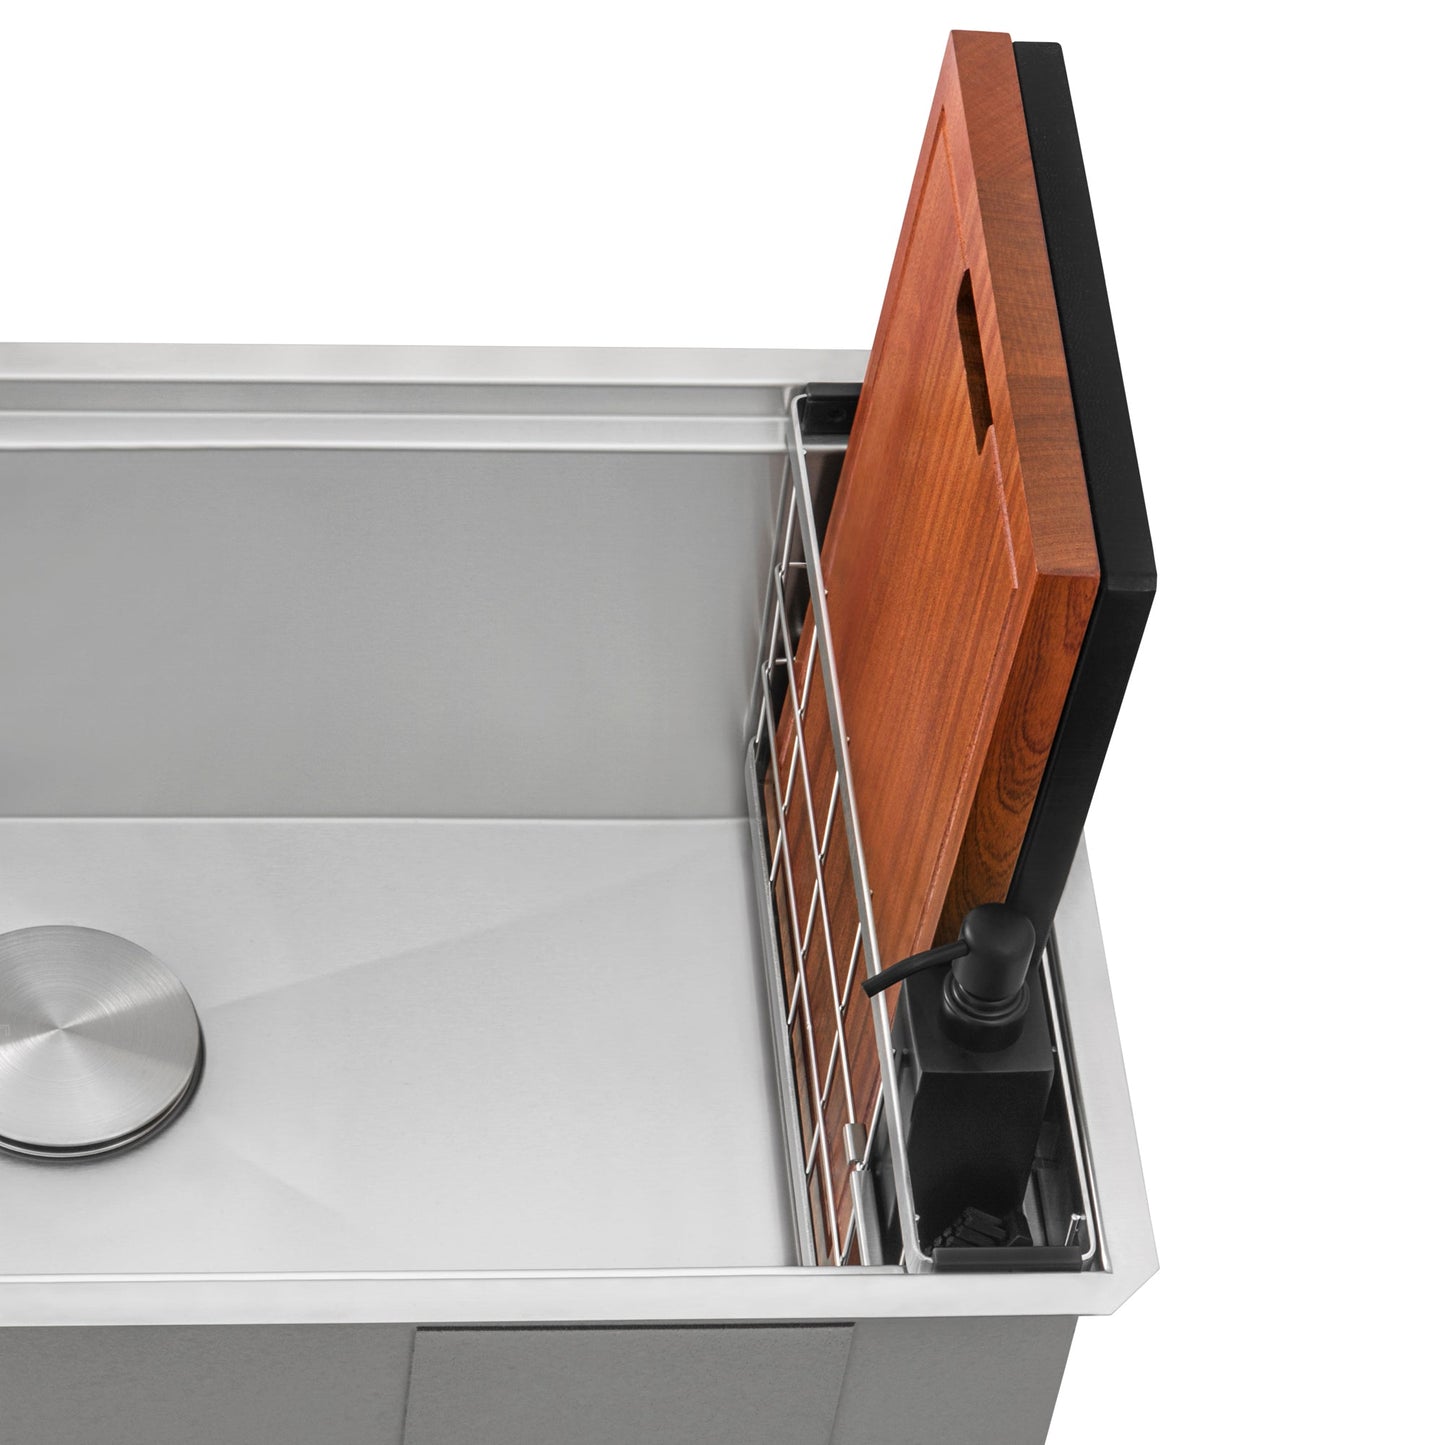 Ruvati Stainless Steel Multi-function Workstation for Kitchen Sink